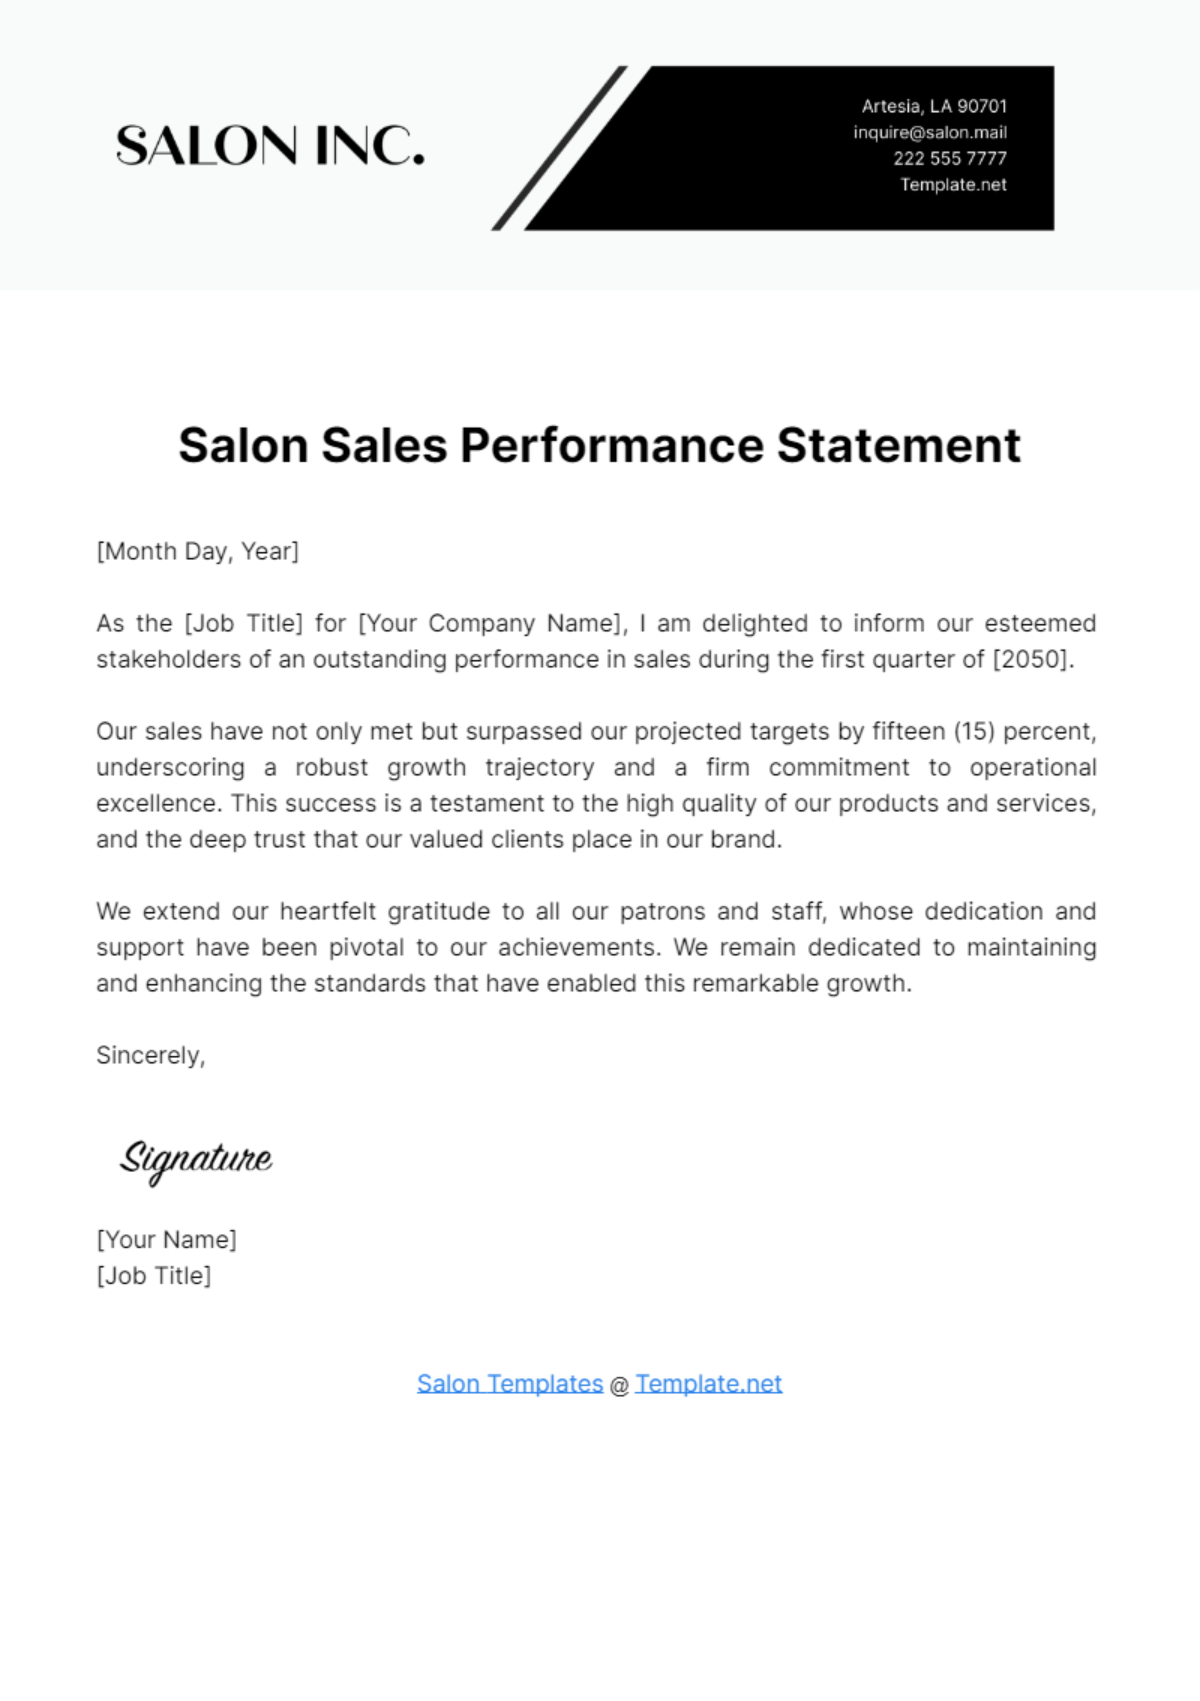 Salon Sales Performance Statement Template